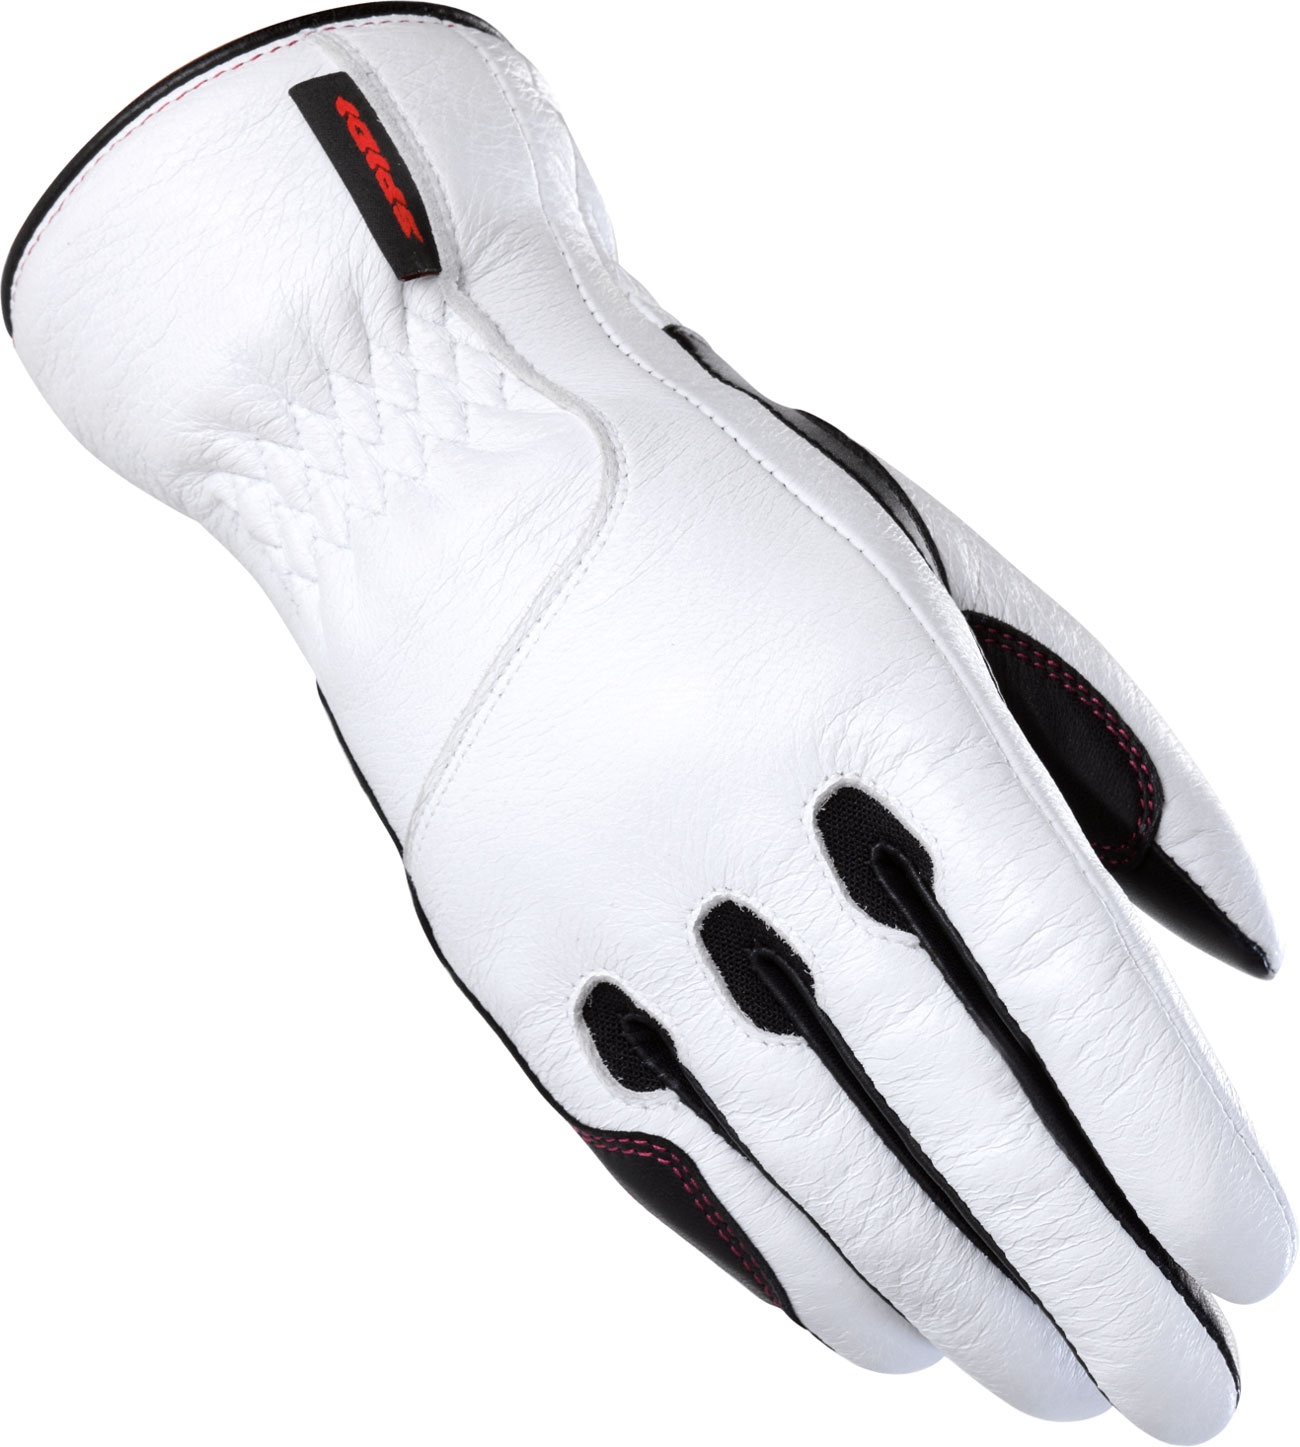 Spidi Class, gants femmes imperméables - Blanc - S